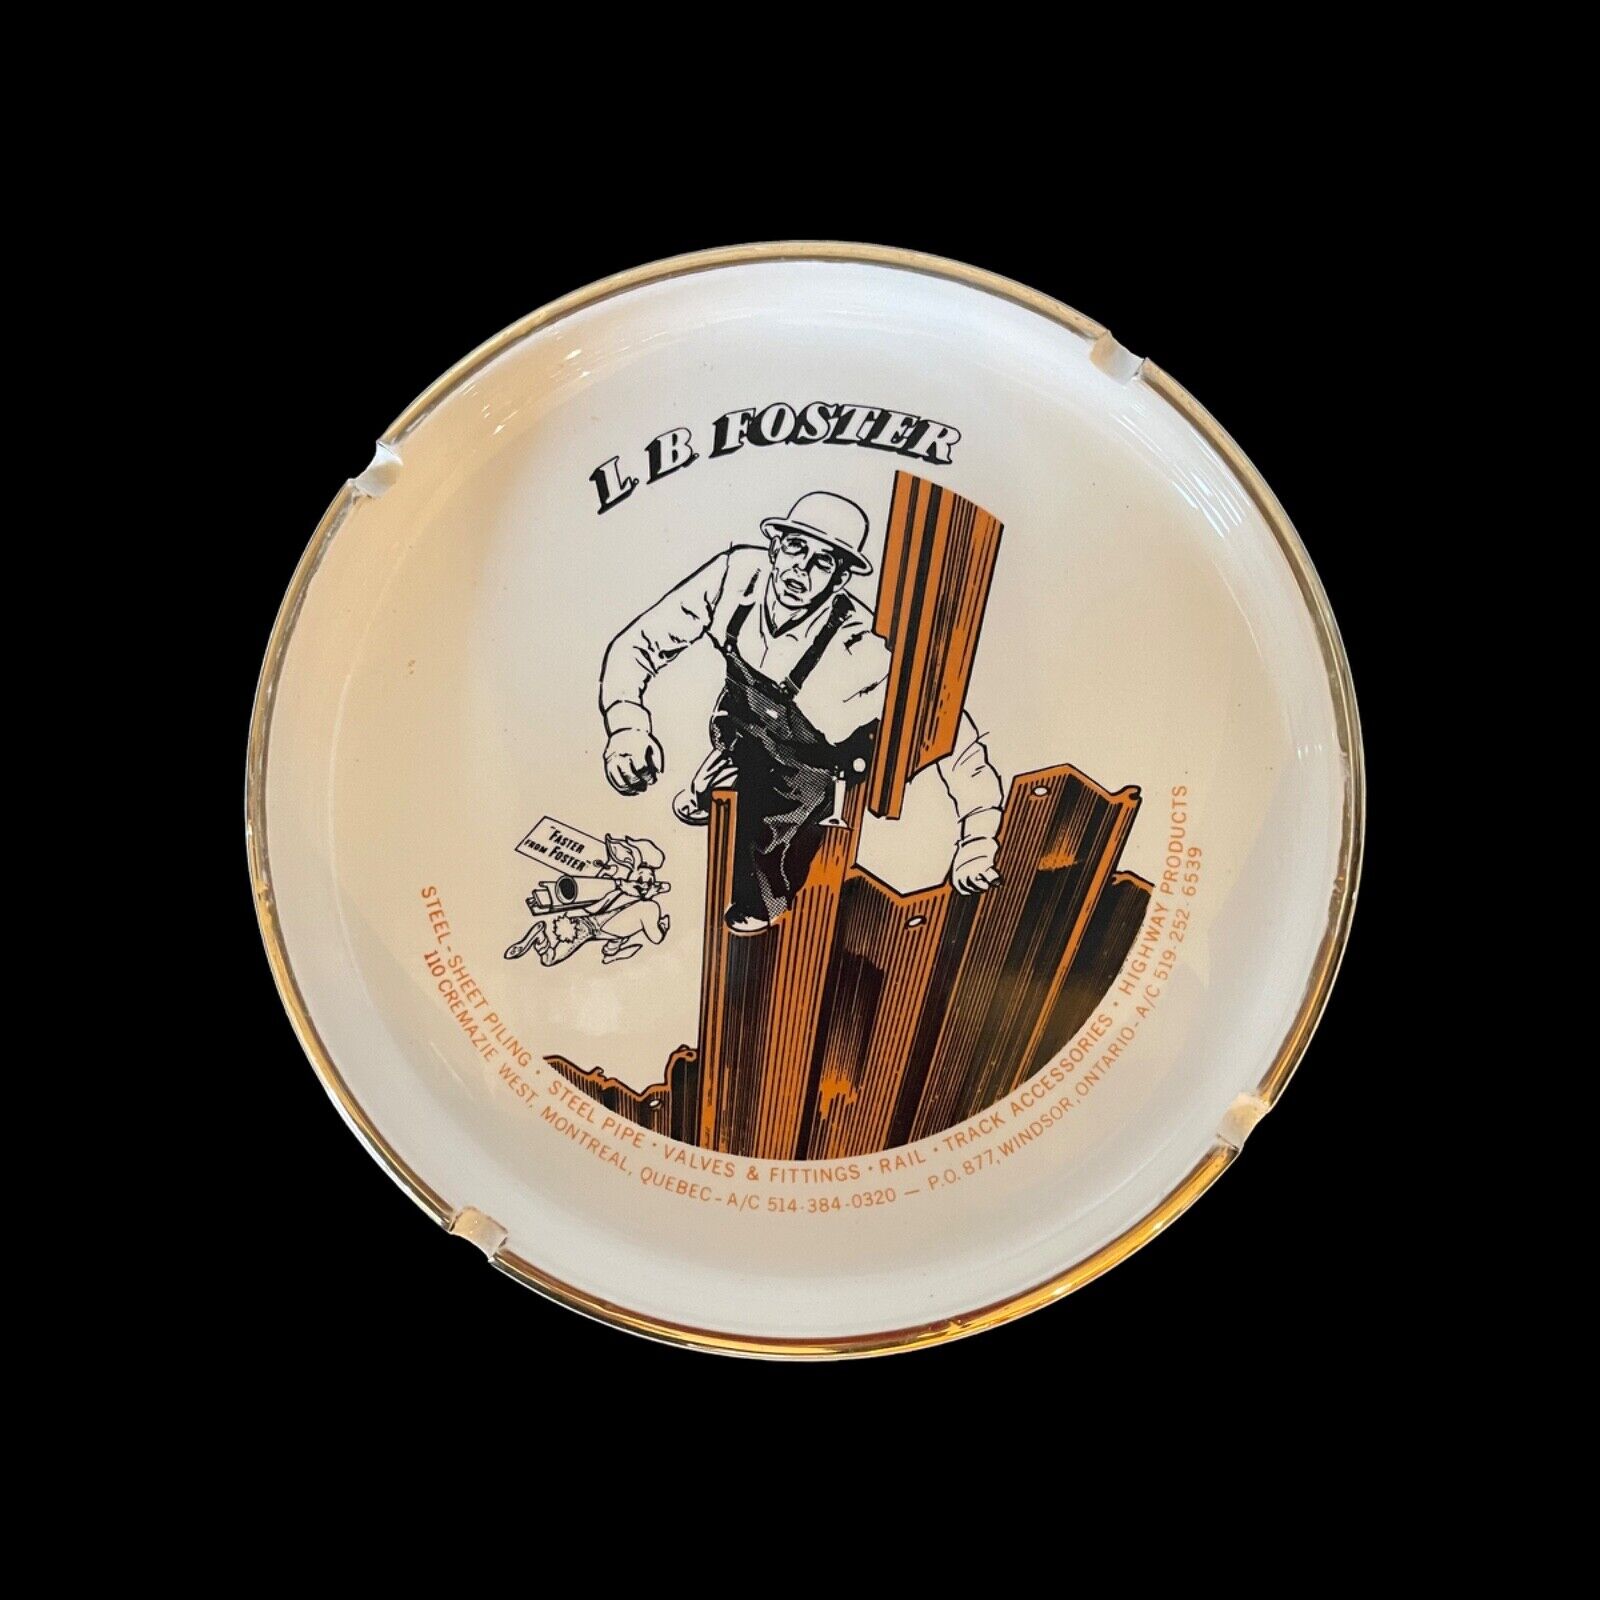 Vintage L.B. Foster advertising ashtray